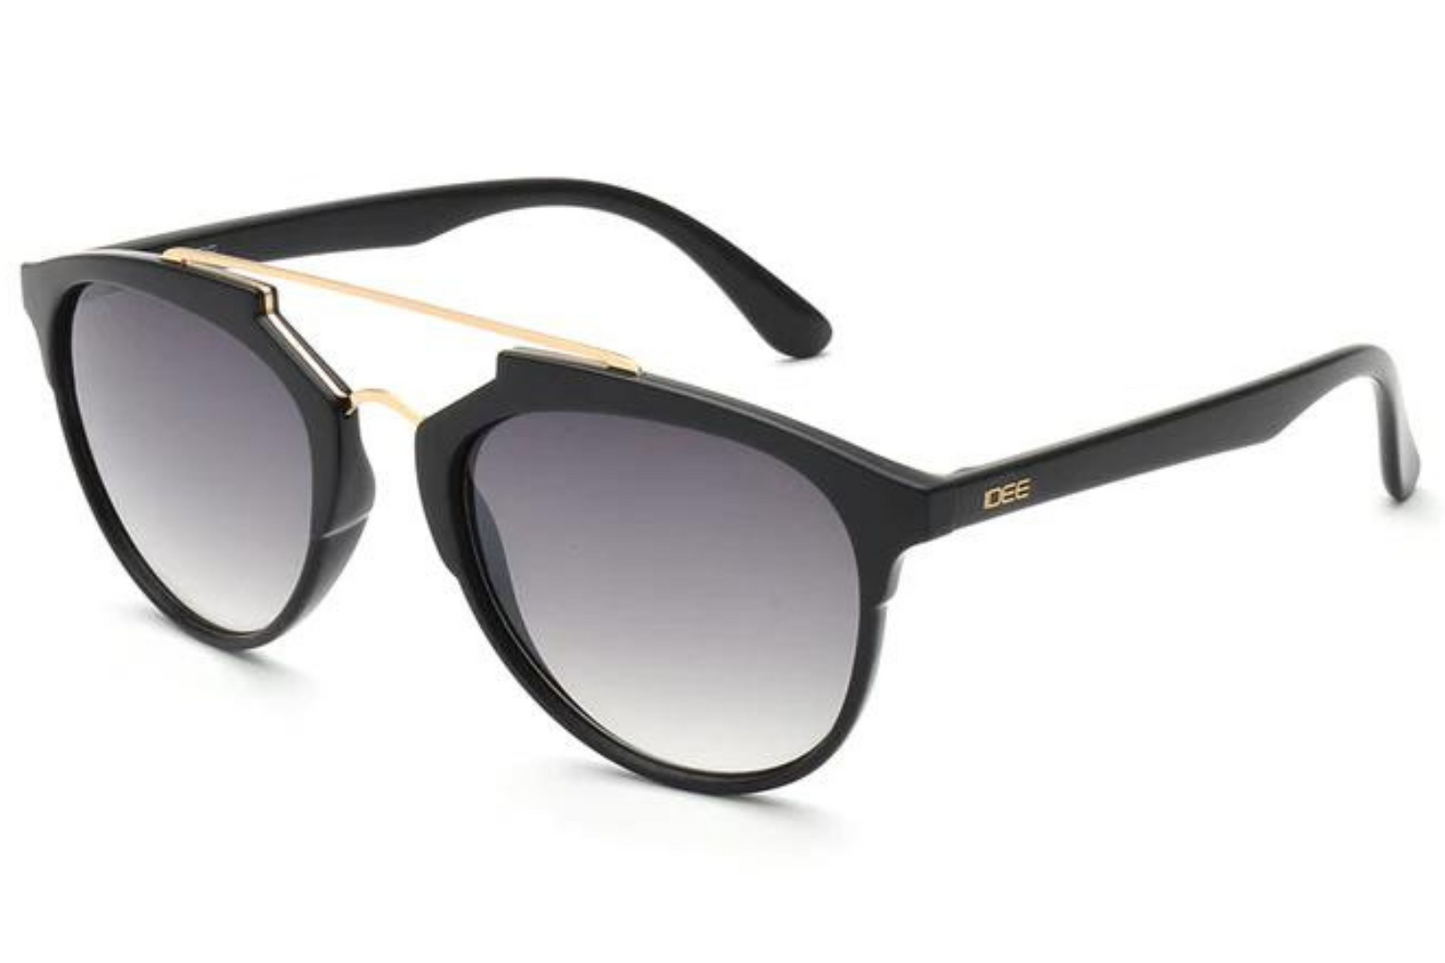 IDEE Sunglasses S2434 C1